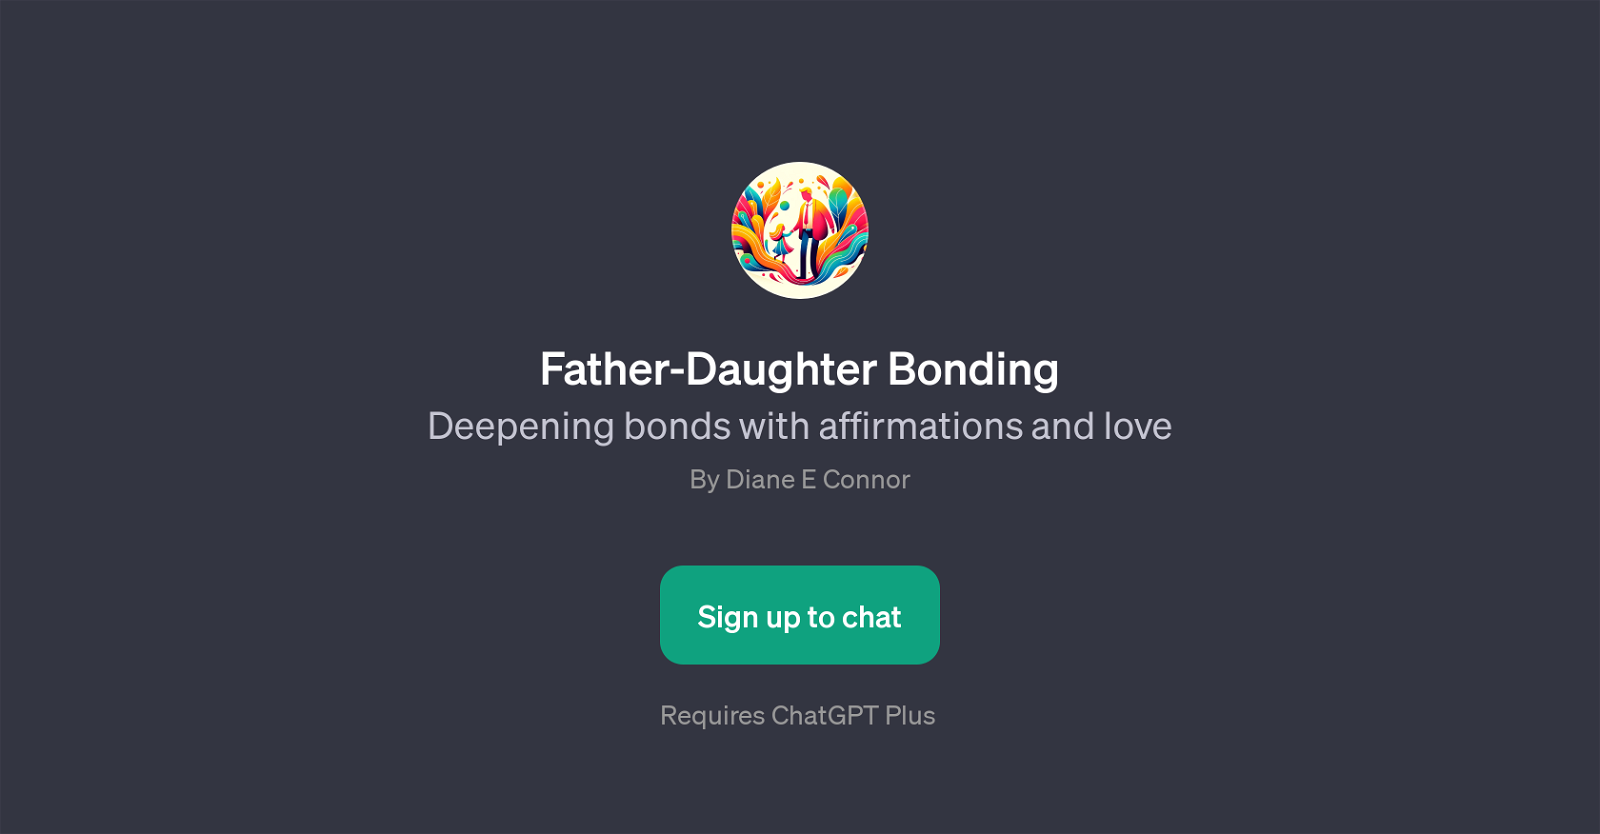 Father-Daughter Bonding website